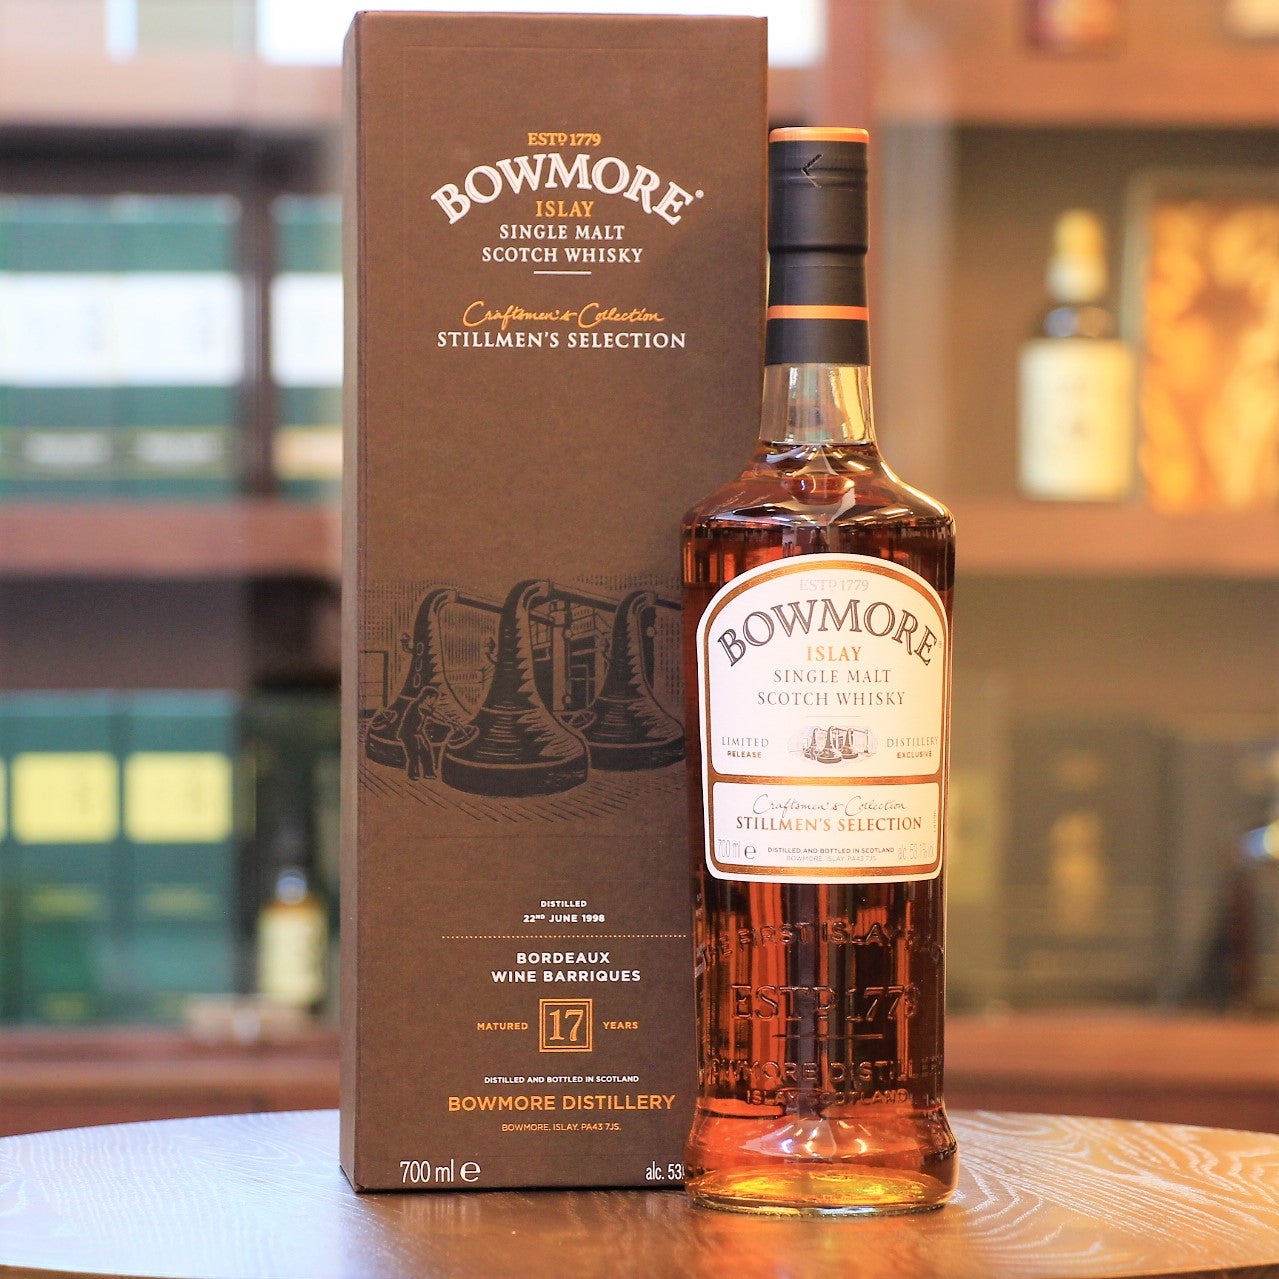 Bowmore 17 Years Old 1998 Stillmen's Selection Scotch Single Malt Whisky